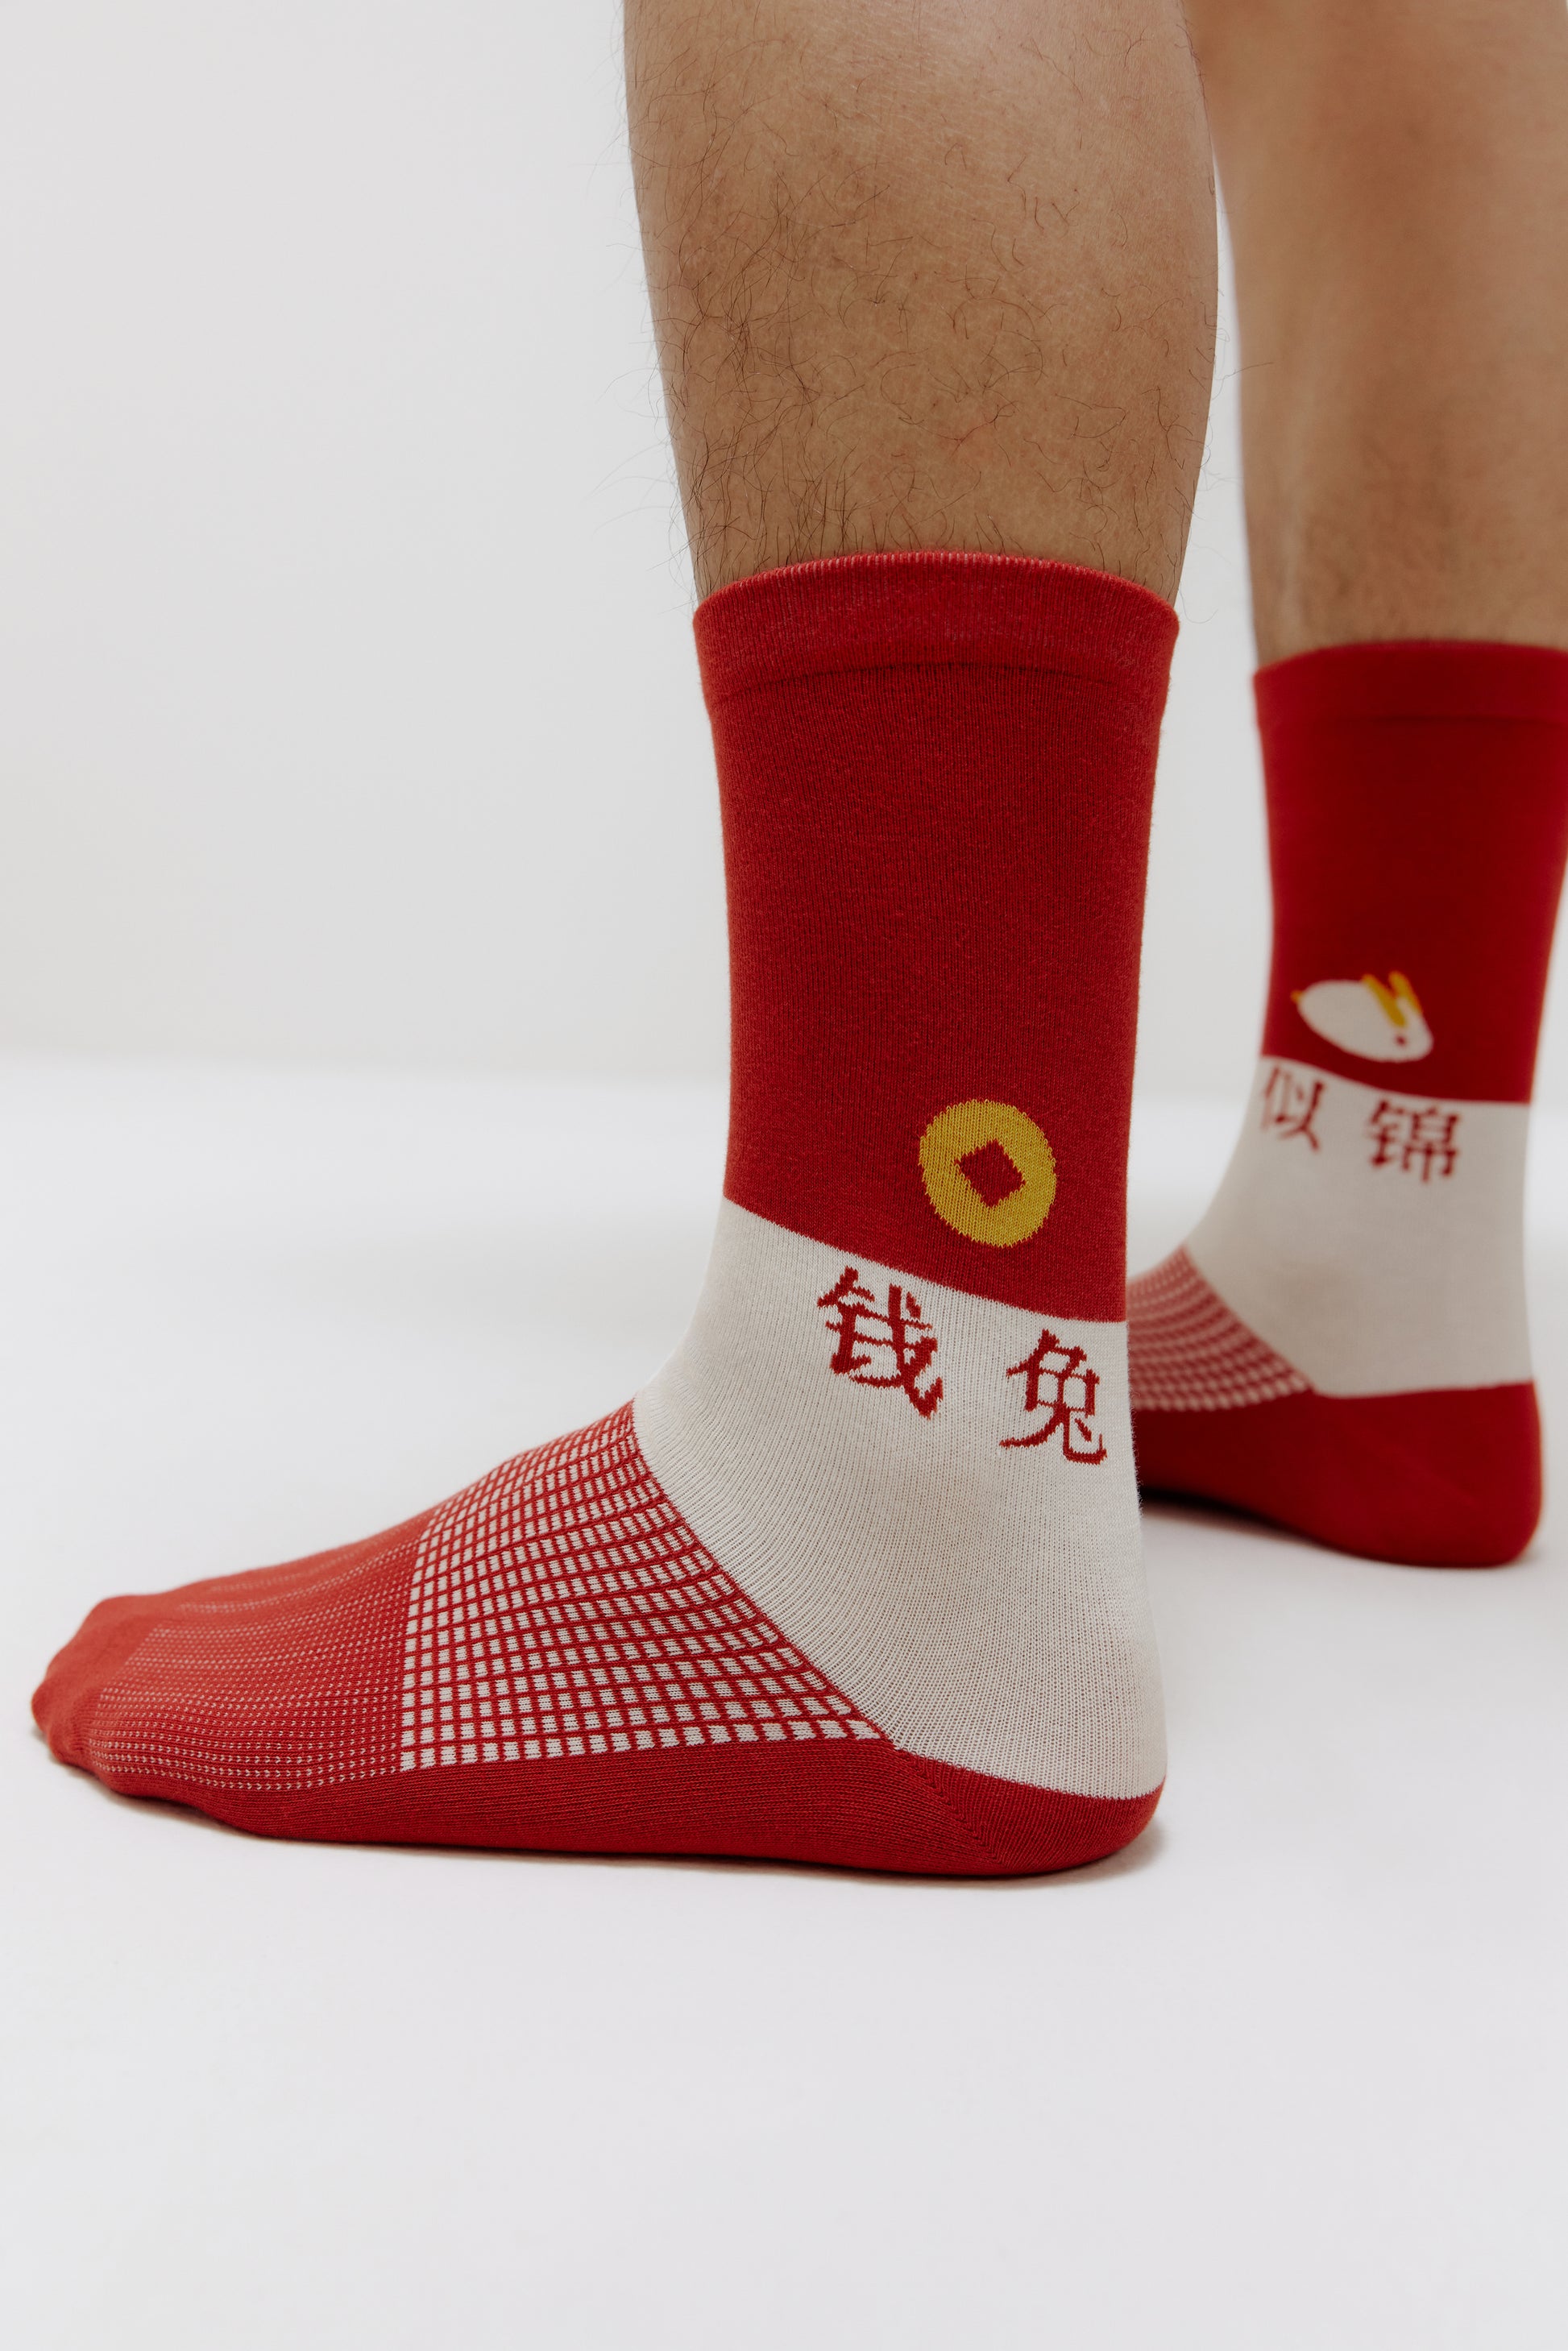 man's feet wearing a pair of socks